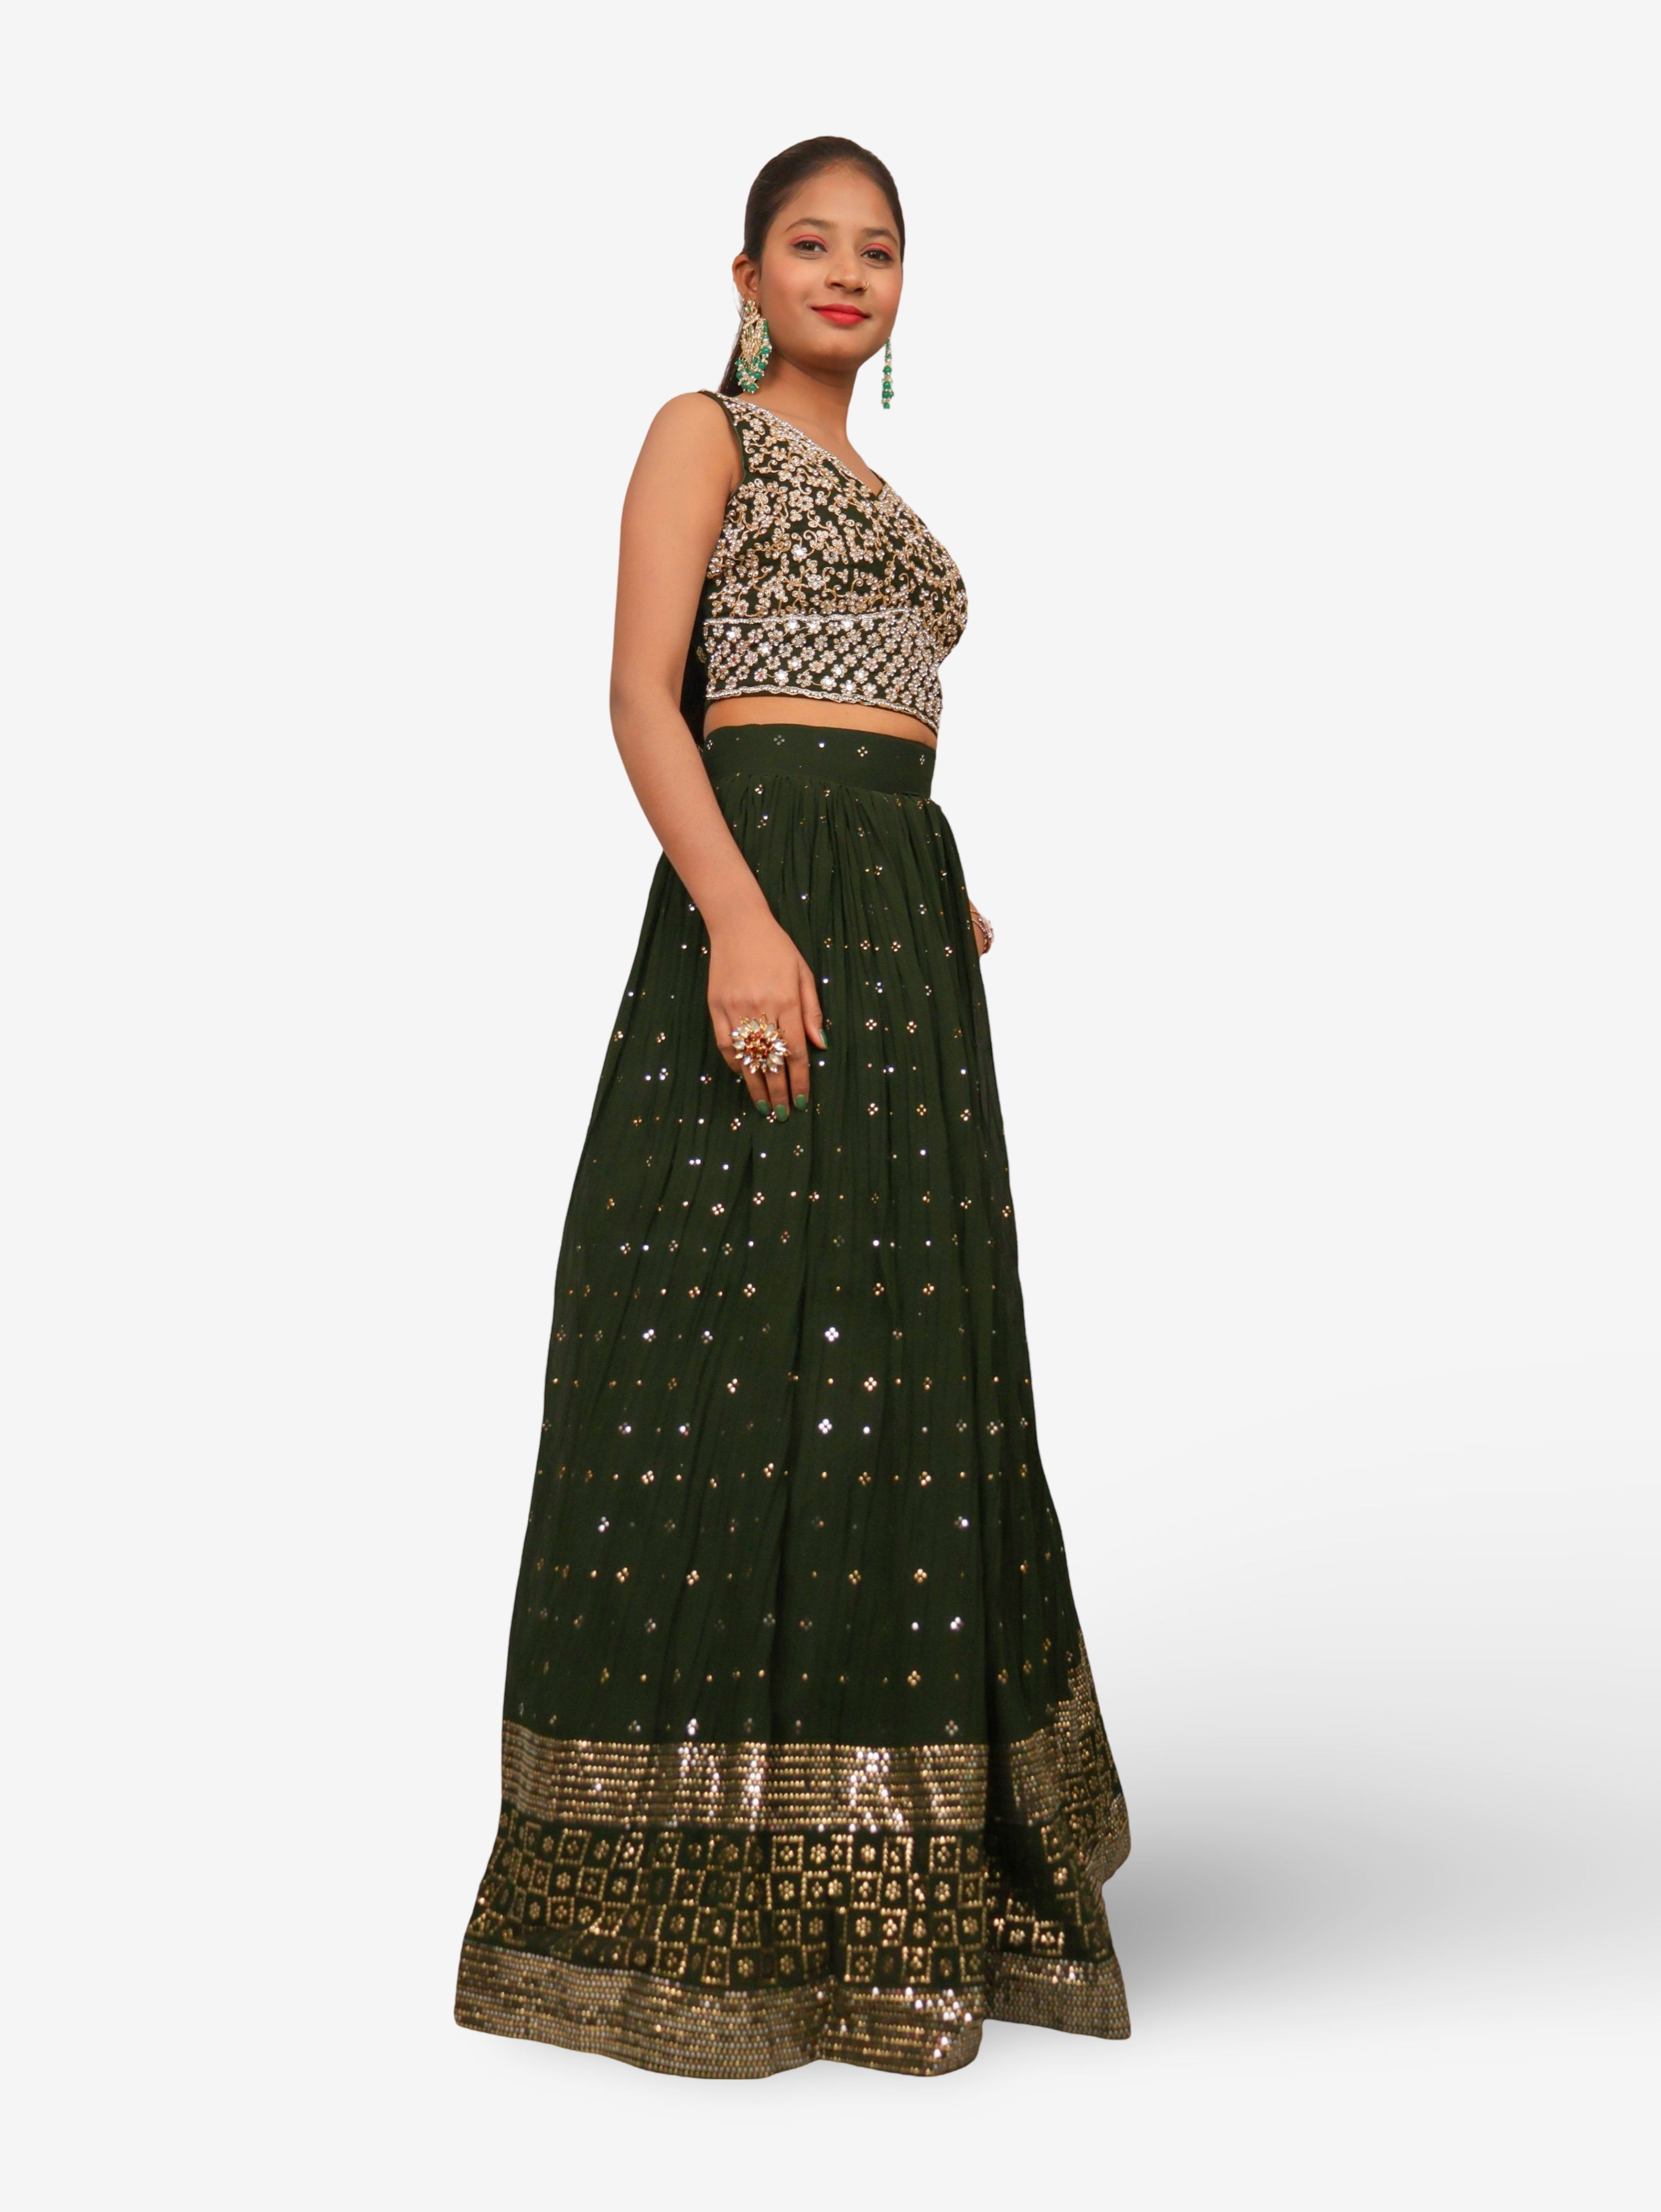 Designer Lehenga &amp; choli with dupatta for Women by Shreekama Dark Green Designer Lehenga for Party Festival Wedding Occasion in Noida